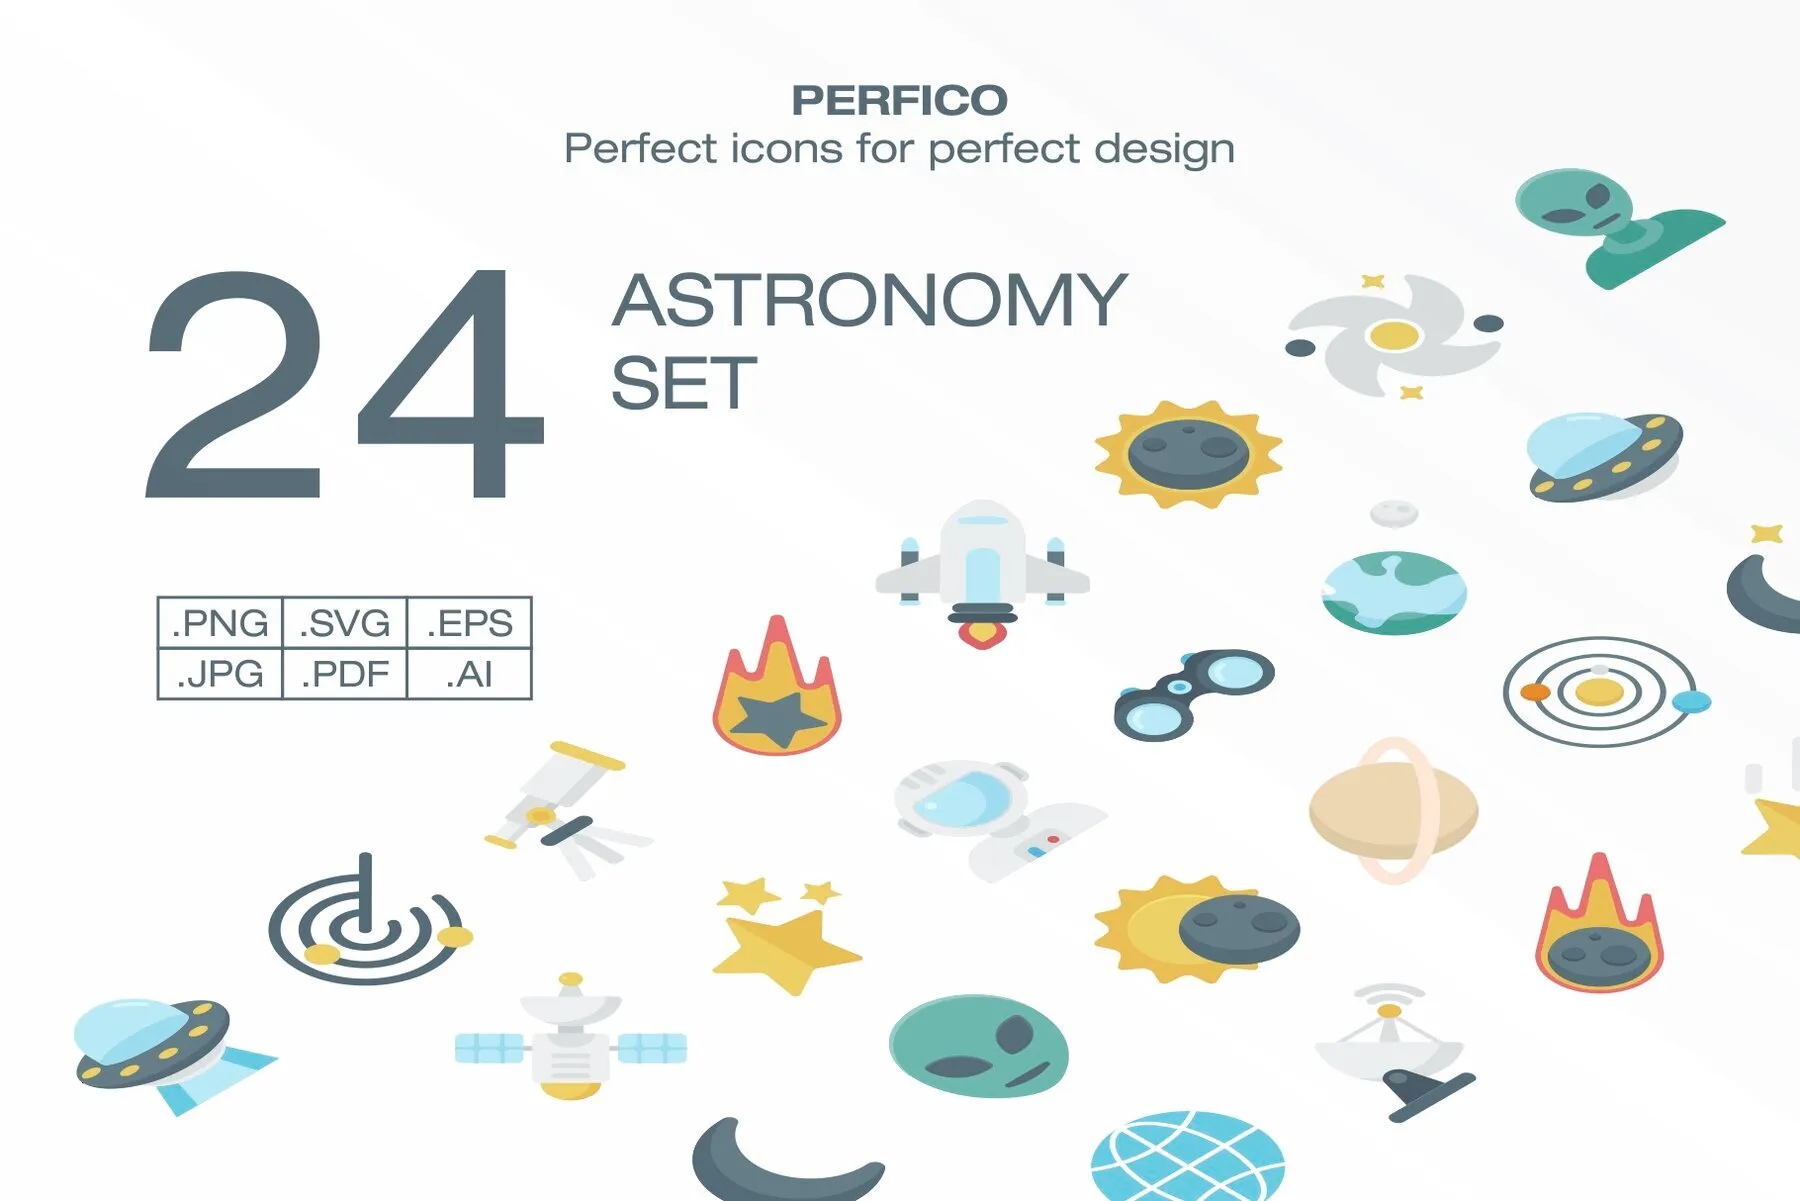 Perfico Astronomy icon set